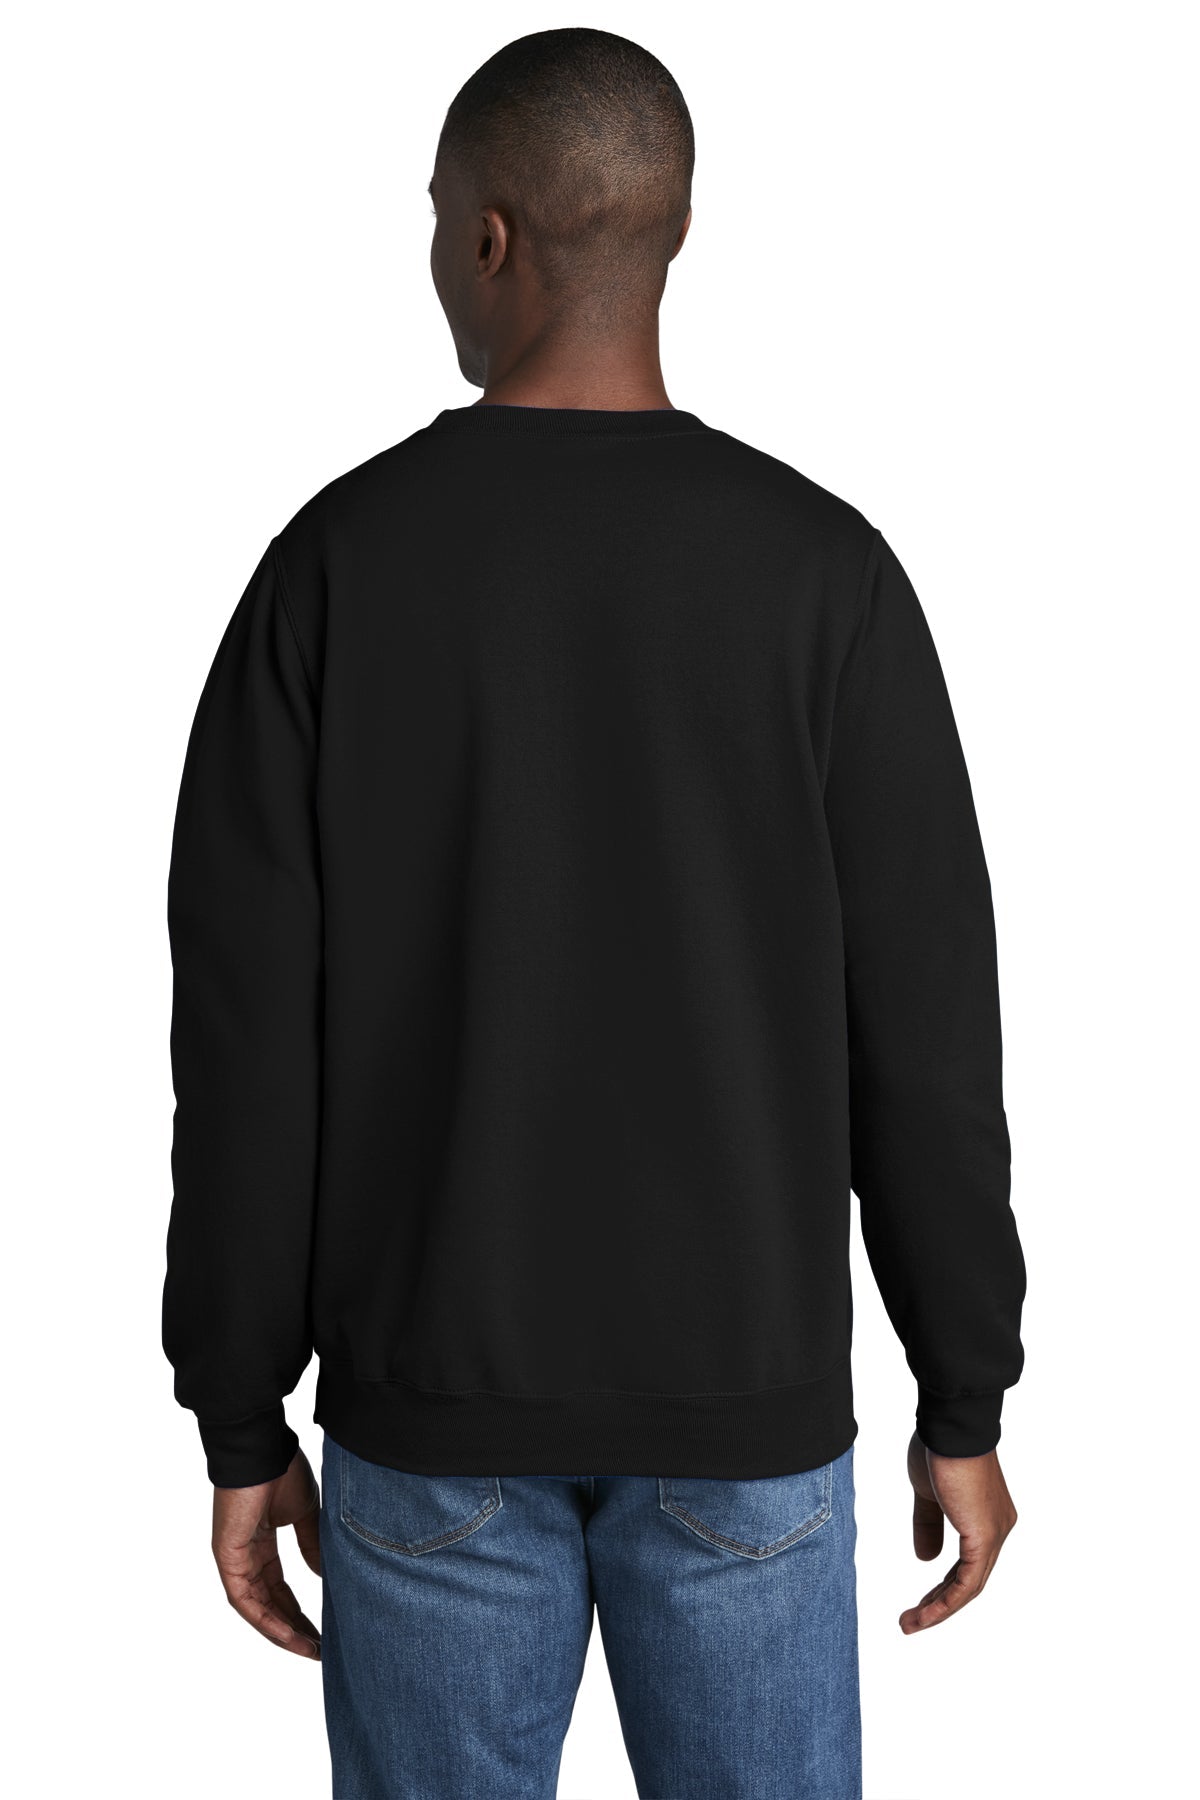 port & company_pc78 _jet black_company_logo_sweatshirts